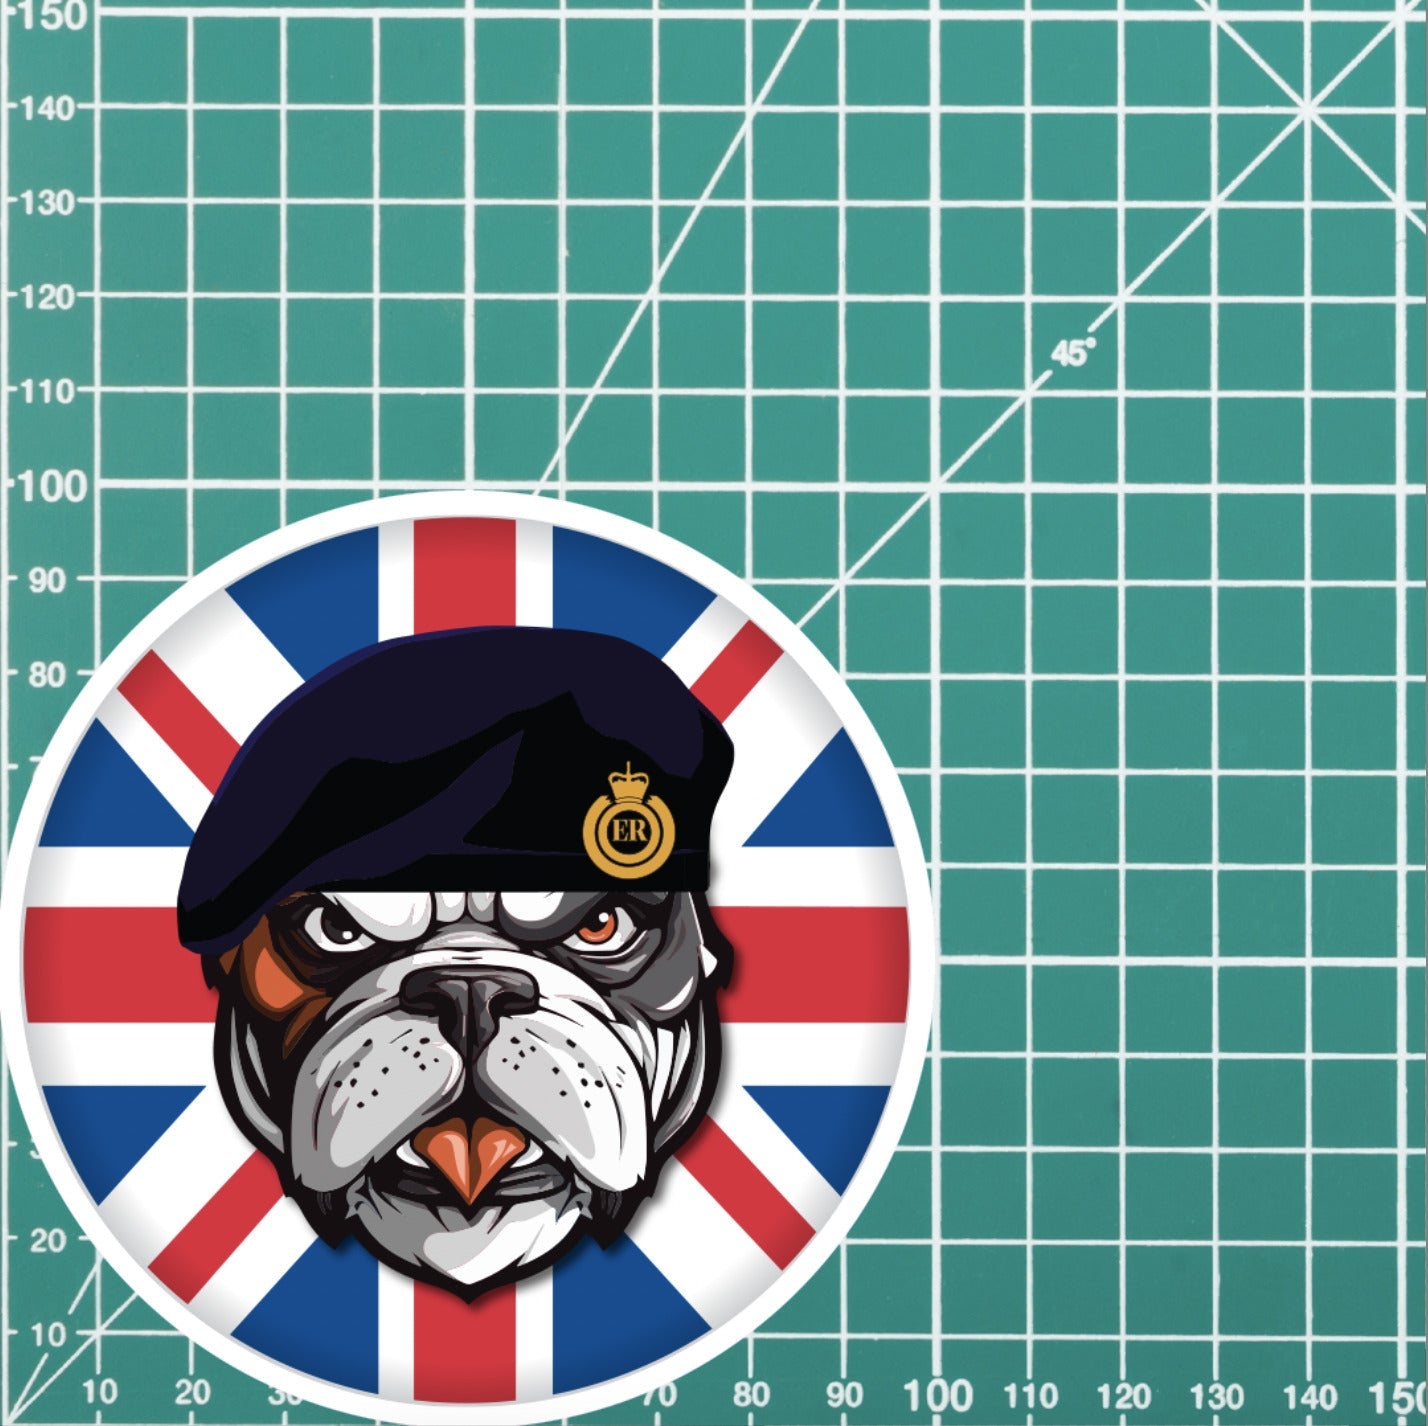 Royal Engineers British Bulldog Decal - 10cm Vinyl Sticker redplume